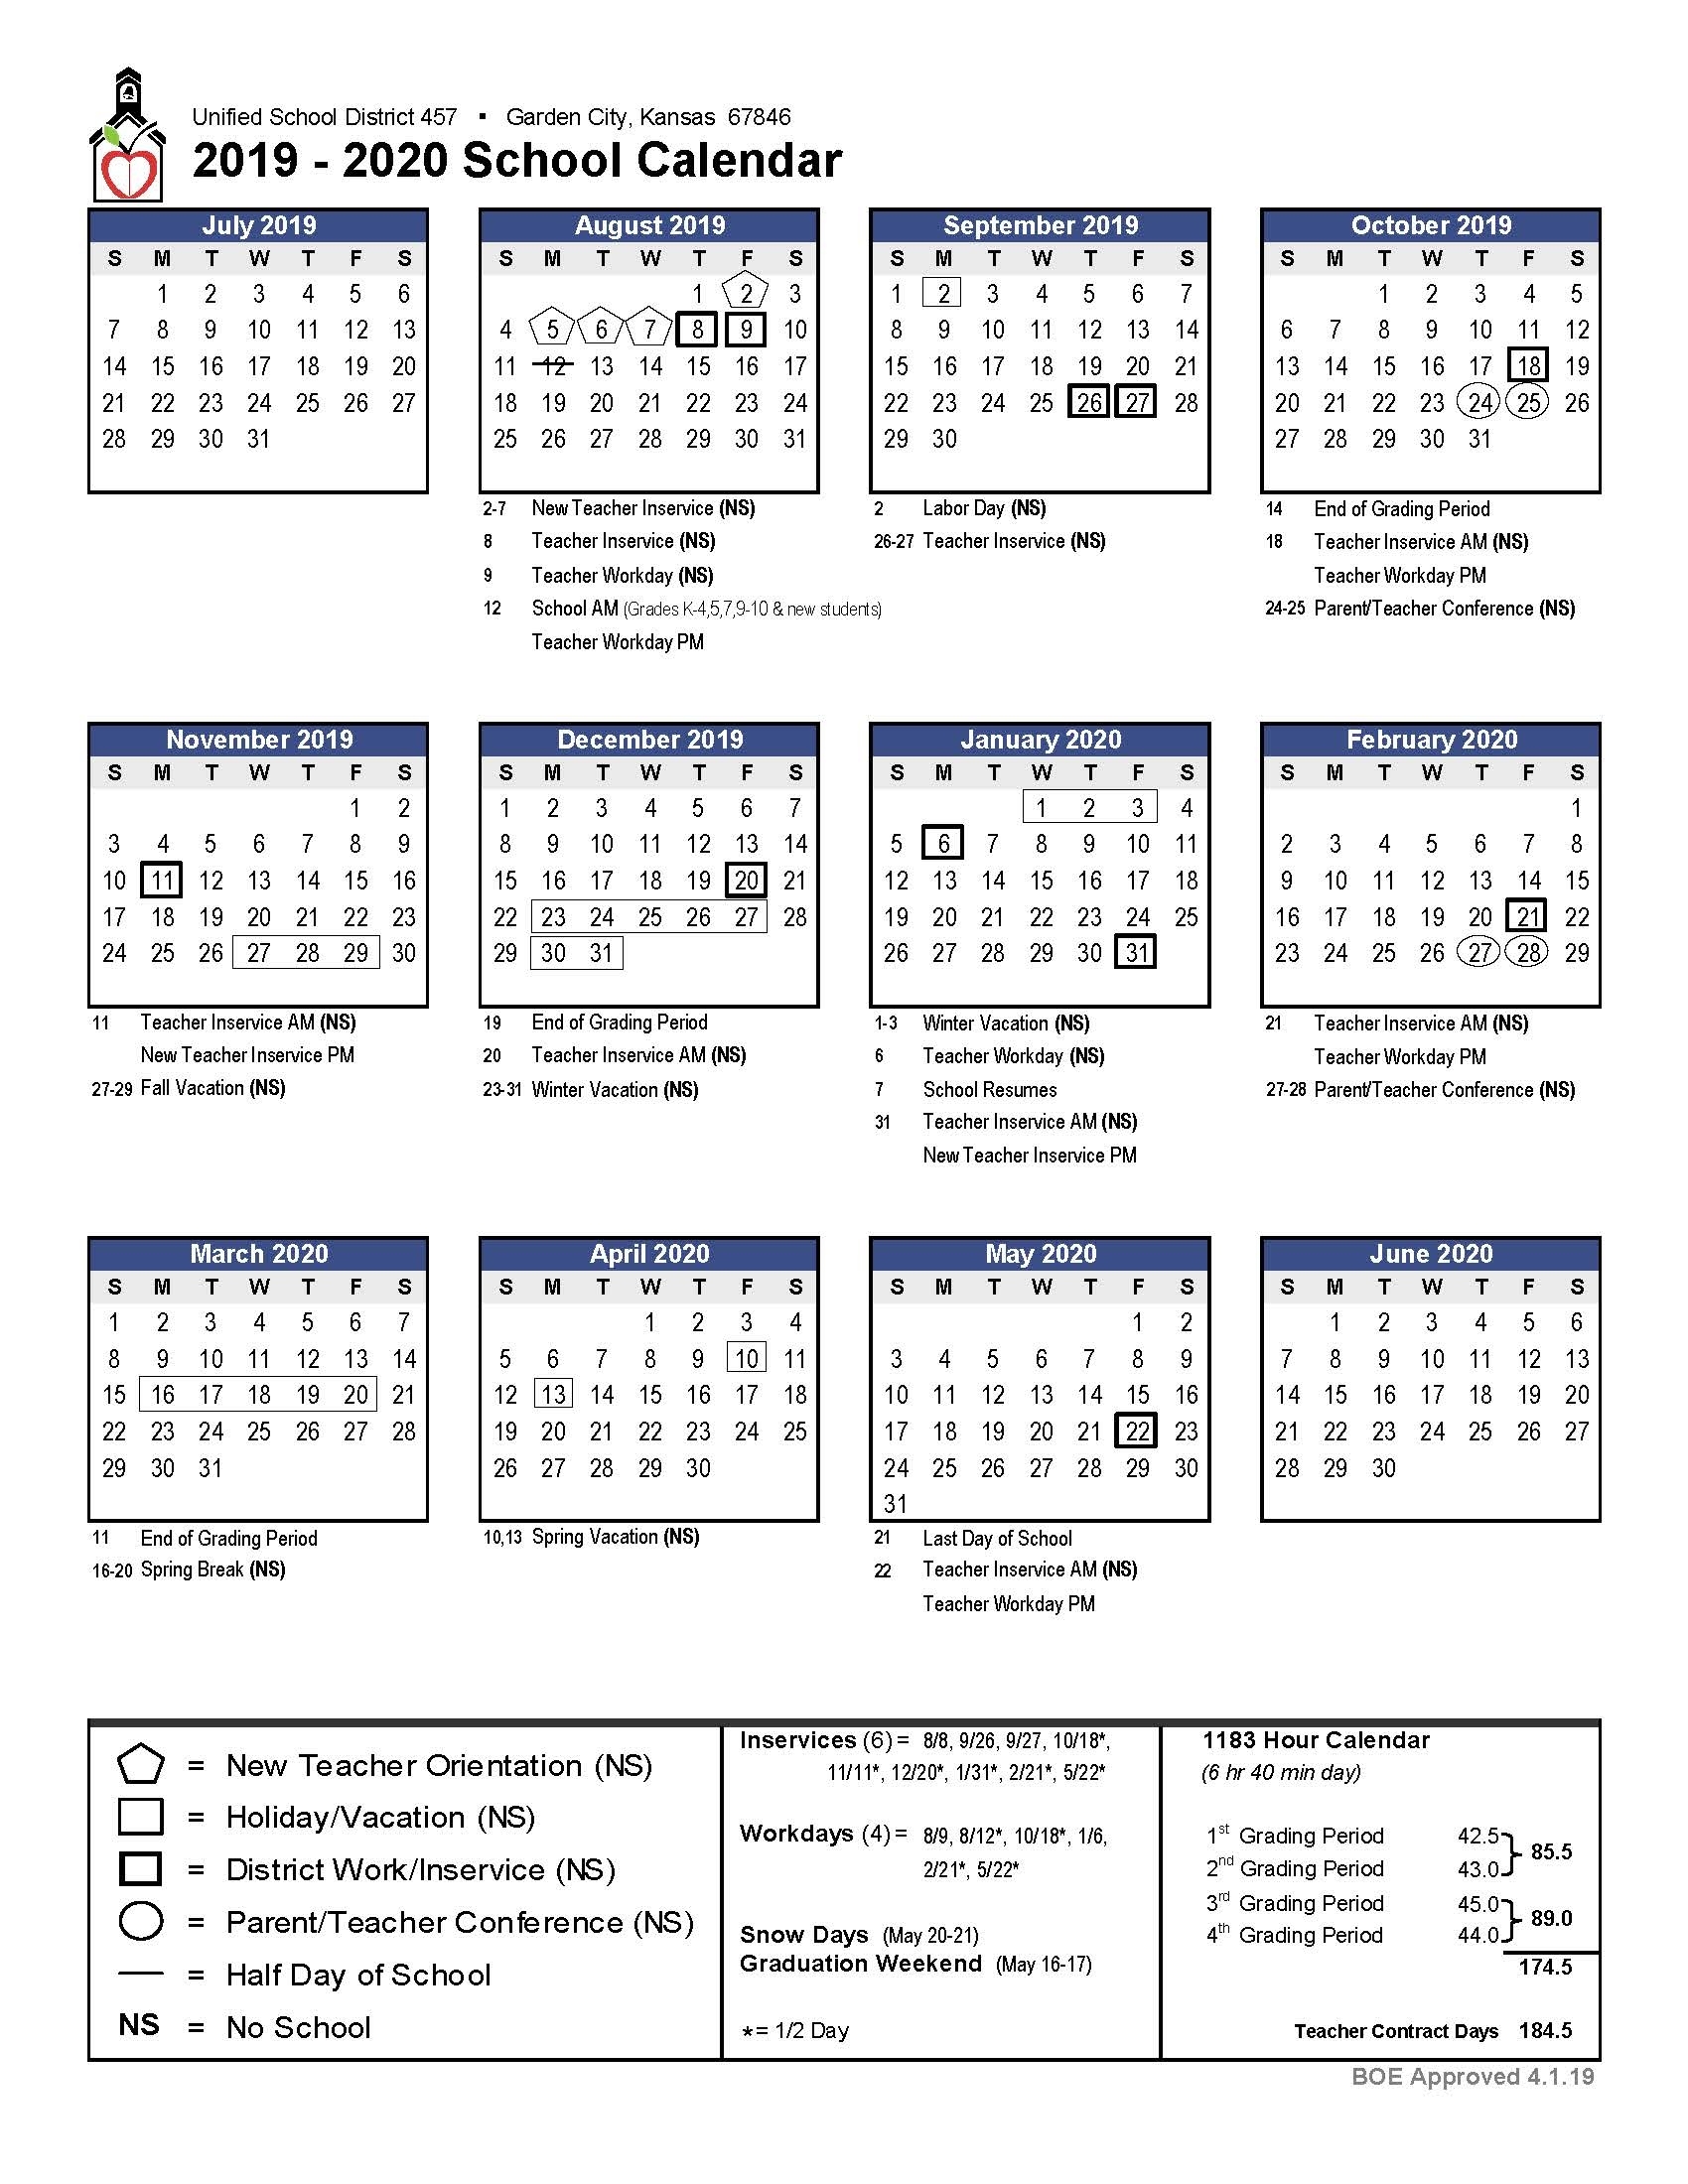 Board Approves 2019-2020 School Calendar - Garden City Public Schools K State School Calendar